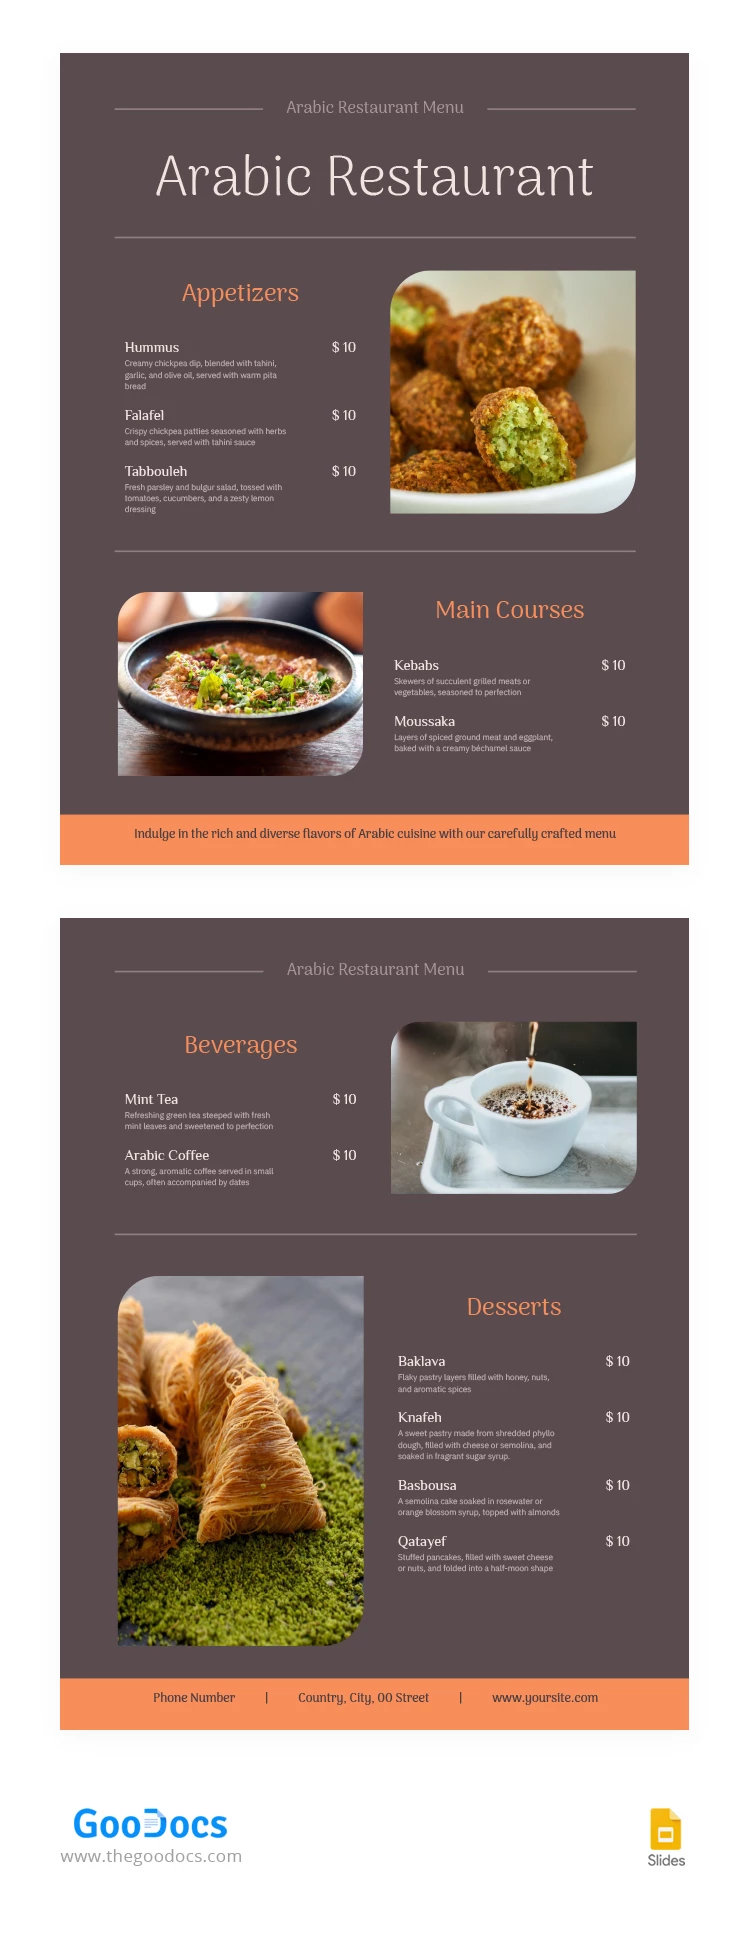 Arabic Restaurant Menu - free Google Docs Template - 10067228